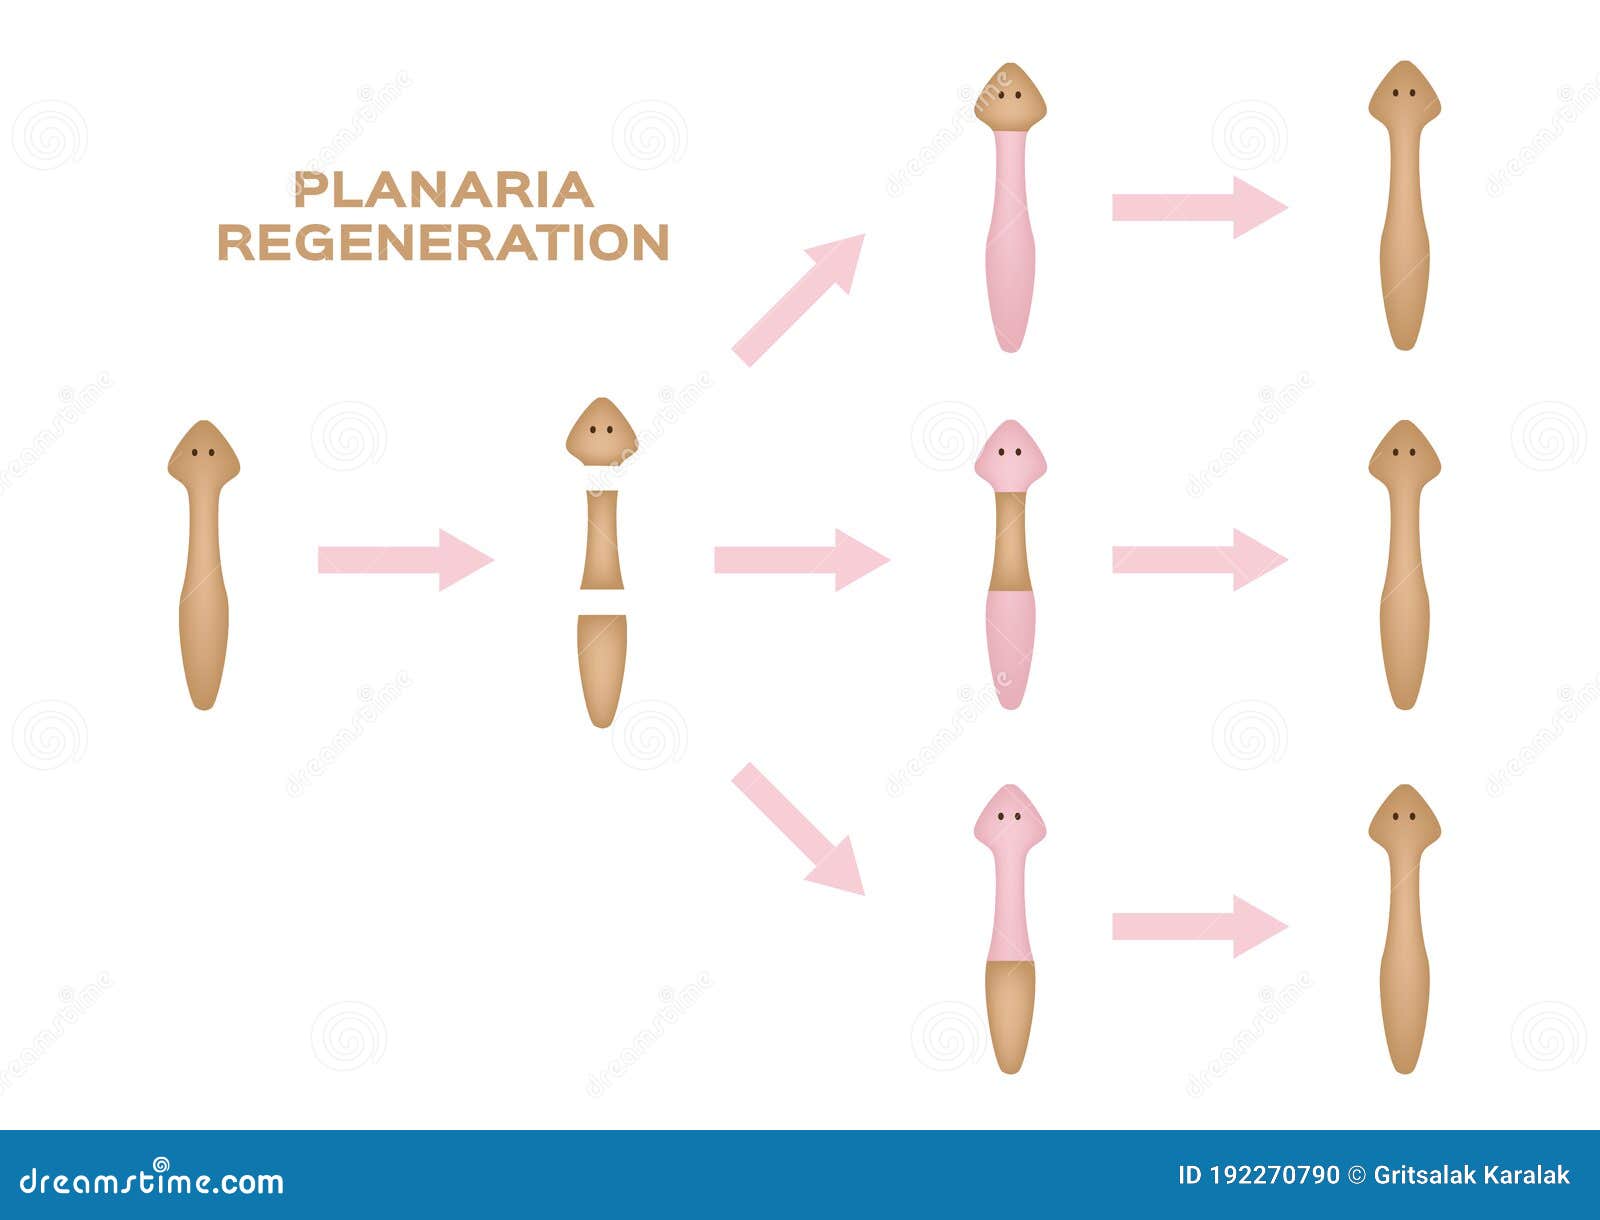 planaria regeneration. divide one to three planaria 